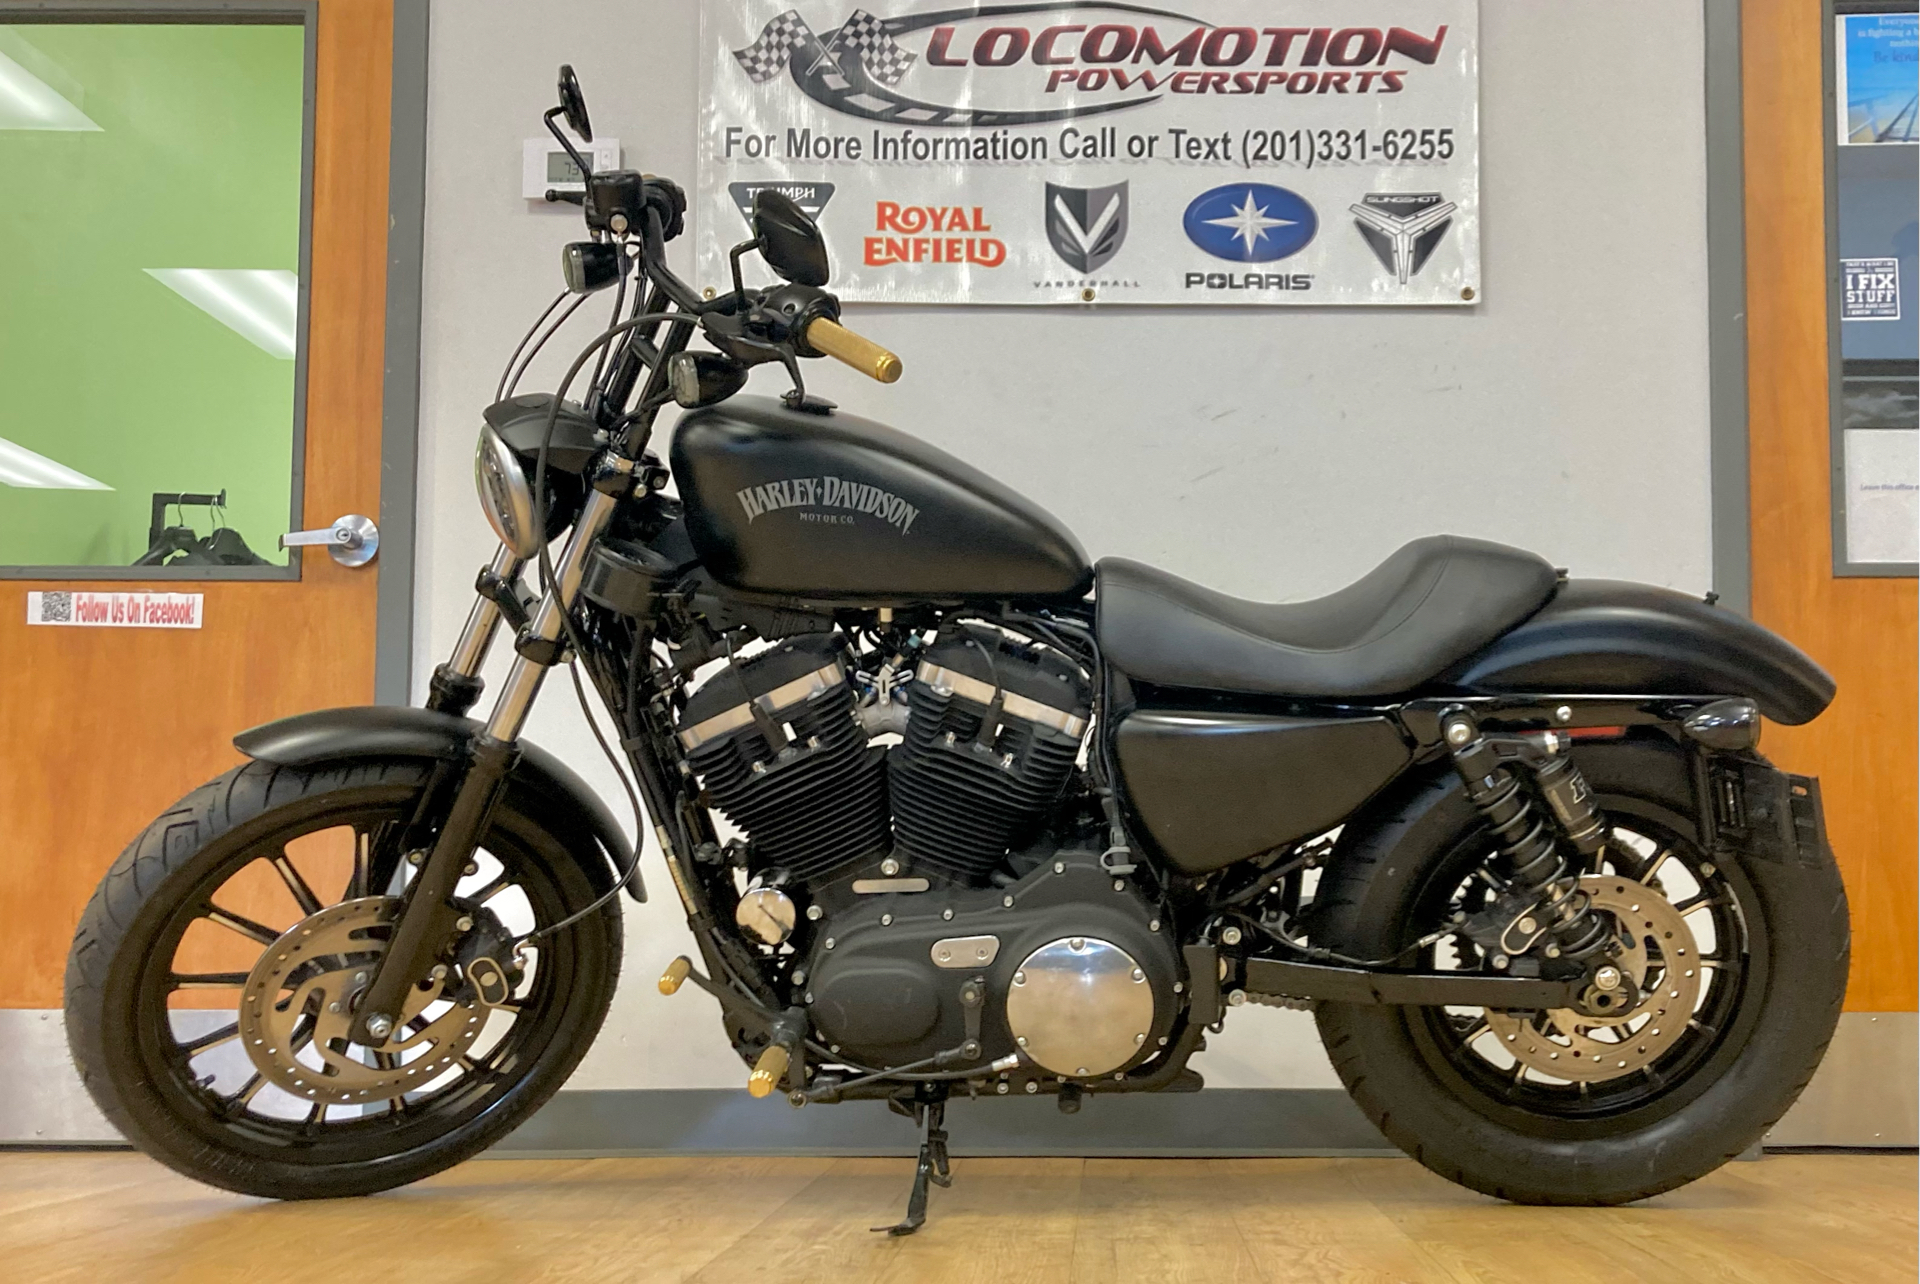 2015 Harley-Davidson Iron 883™ in Mahwah, New Jersey - Photo 2